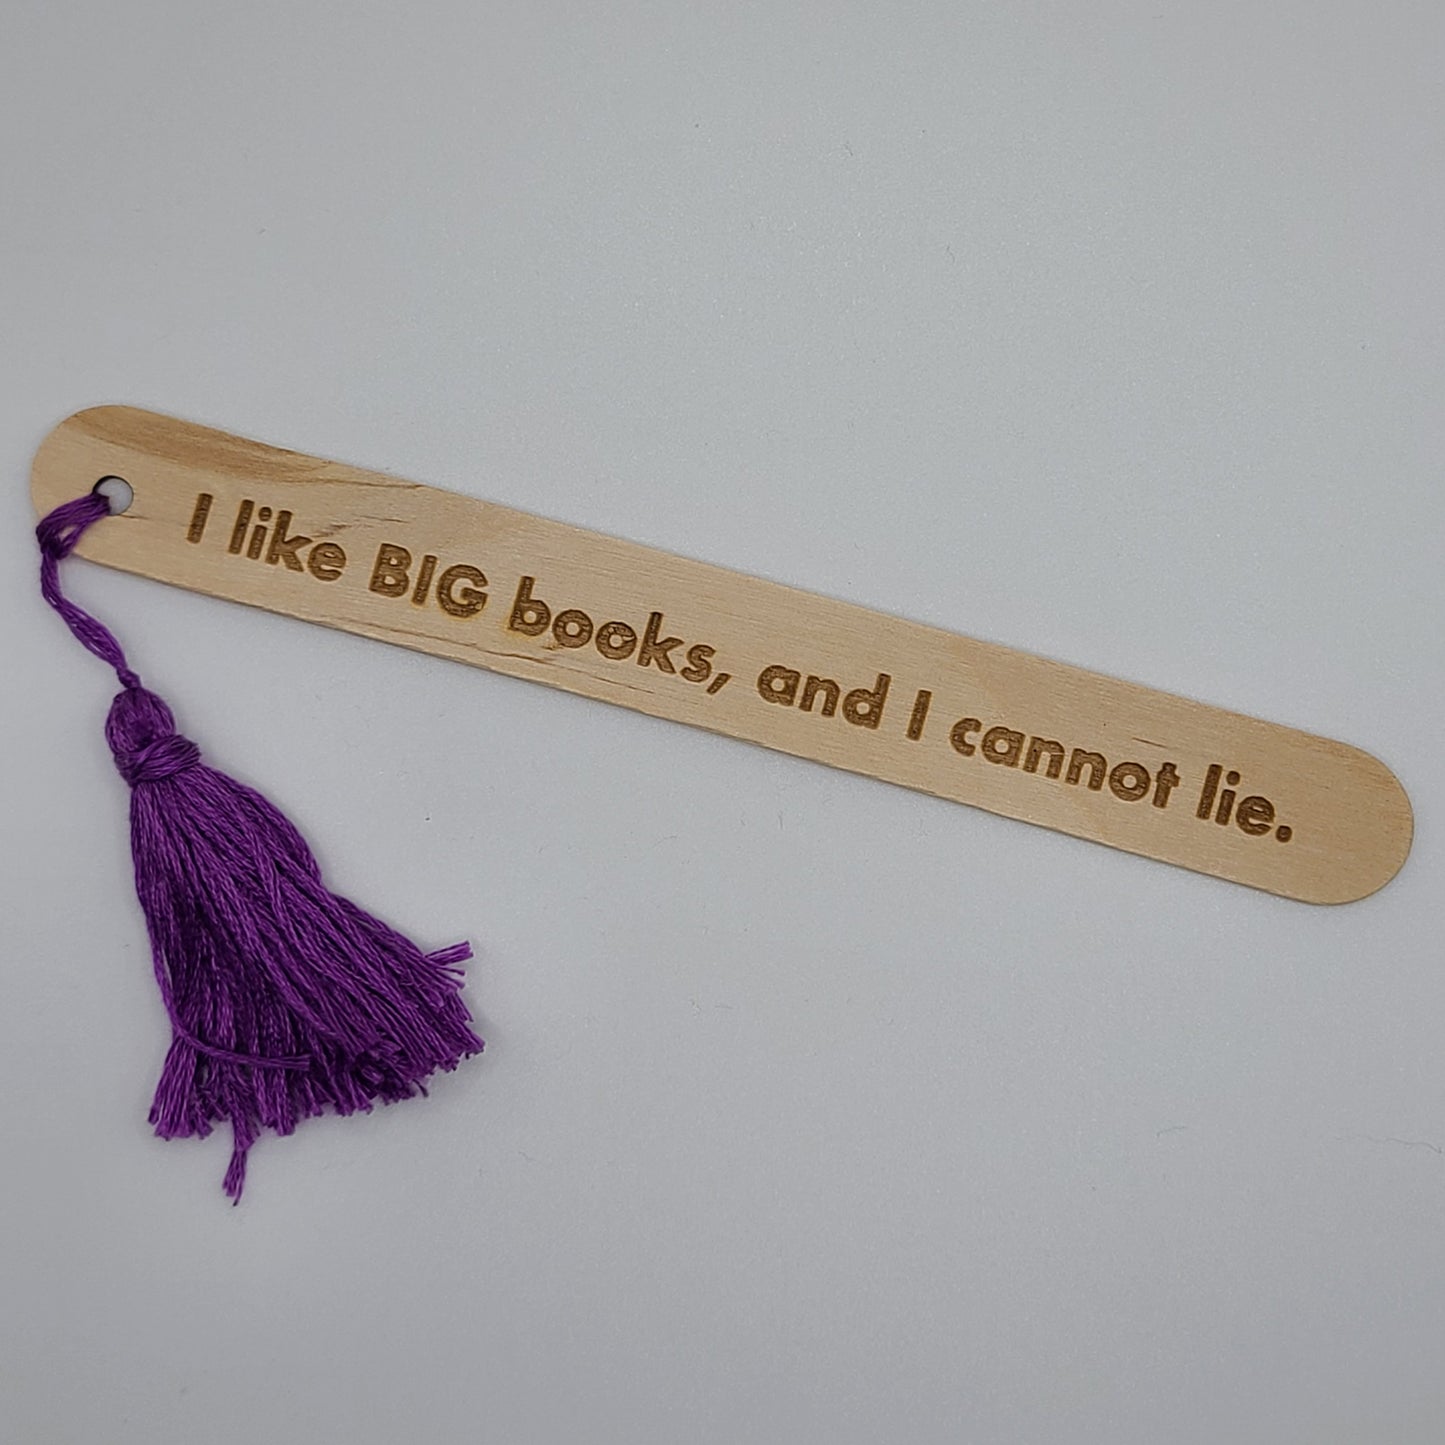 "I like BIG books, and I cannot lie." popsicle bookmark